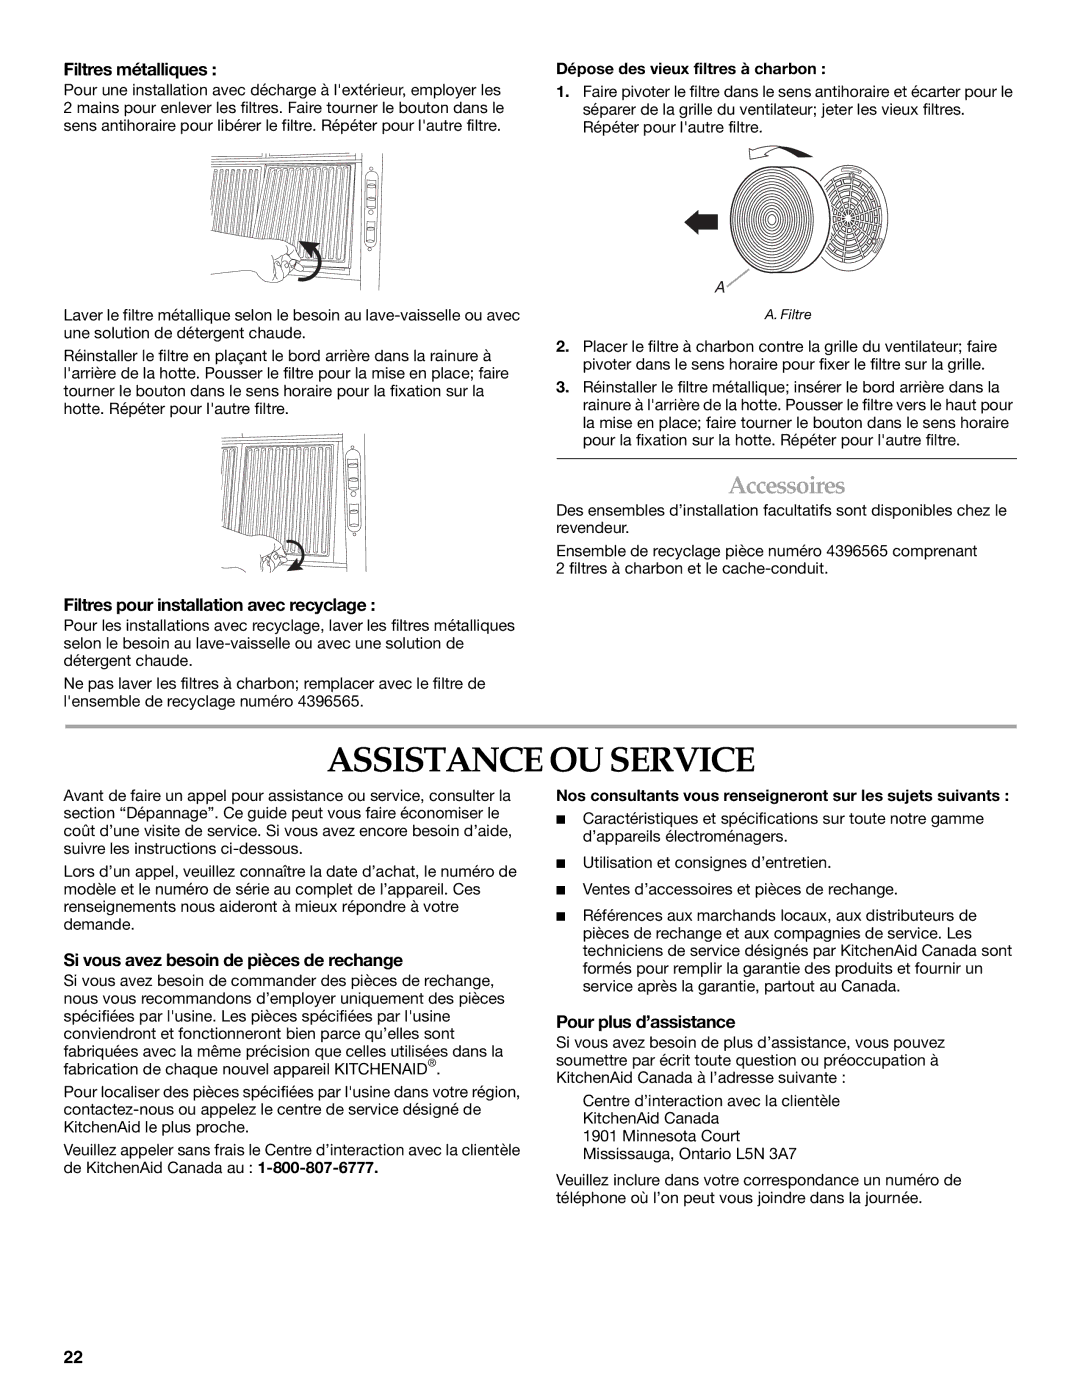 KitchenAid RangeHood installation instructions Assistance OU Service, Accessoires 